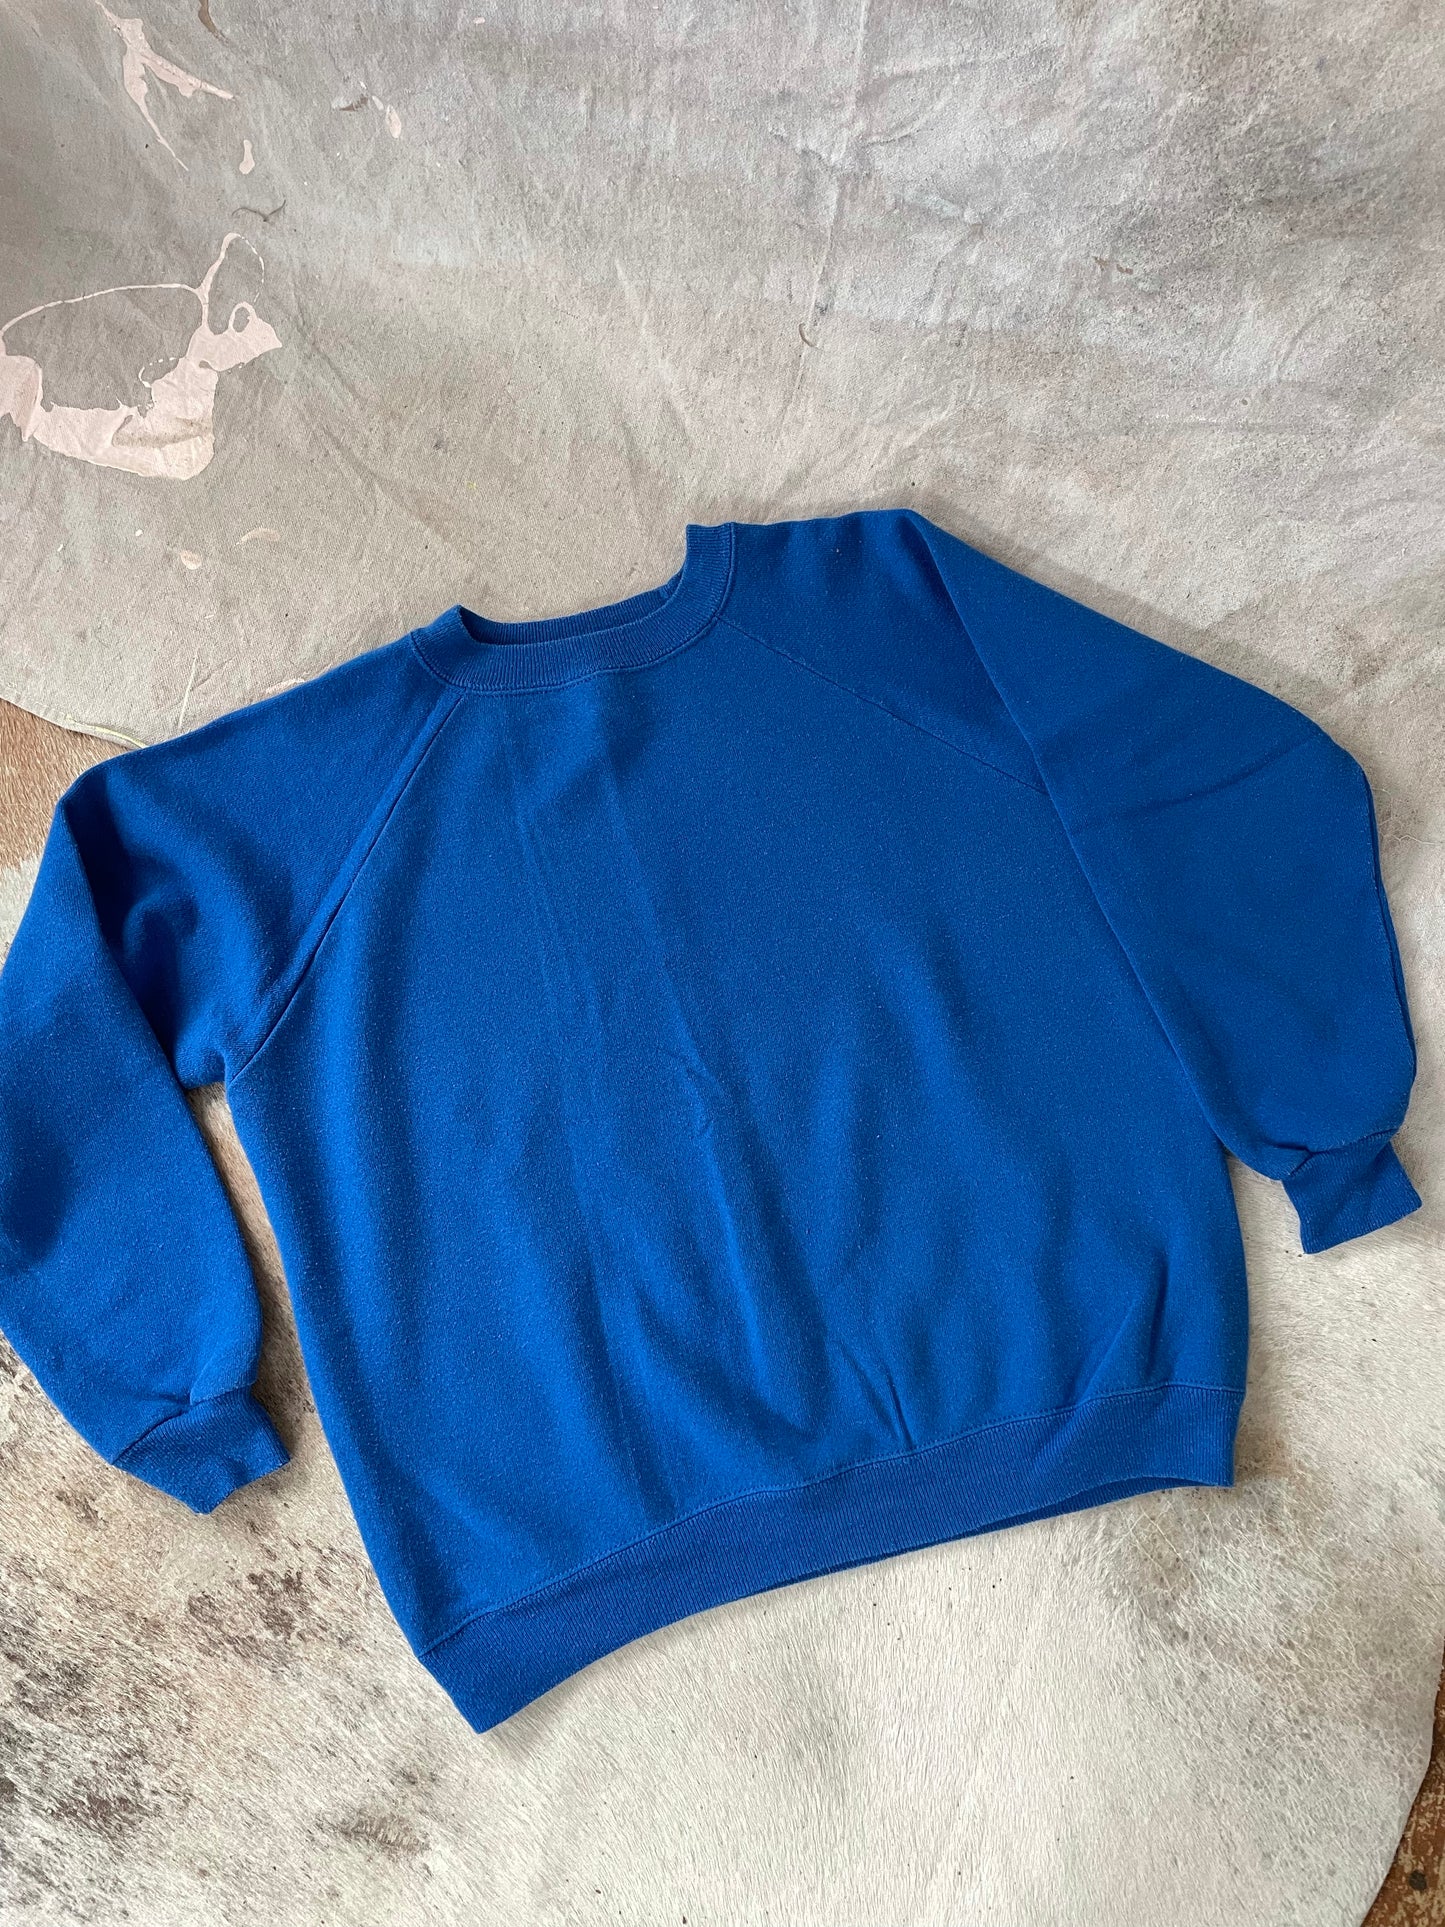 Royal Blue Hanes Sweatshirt